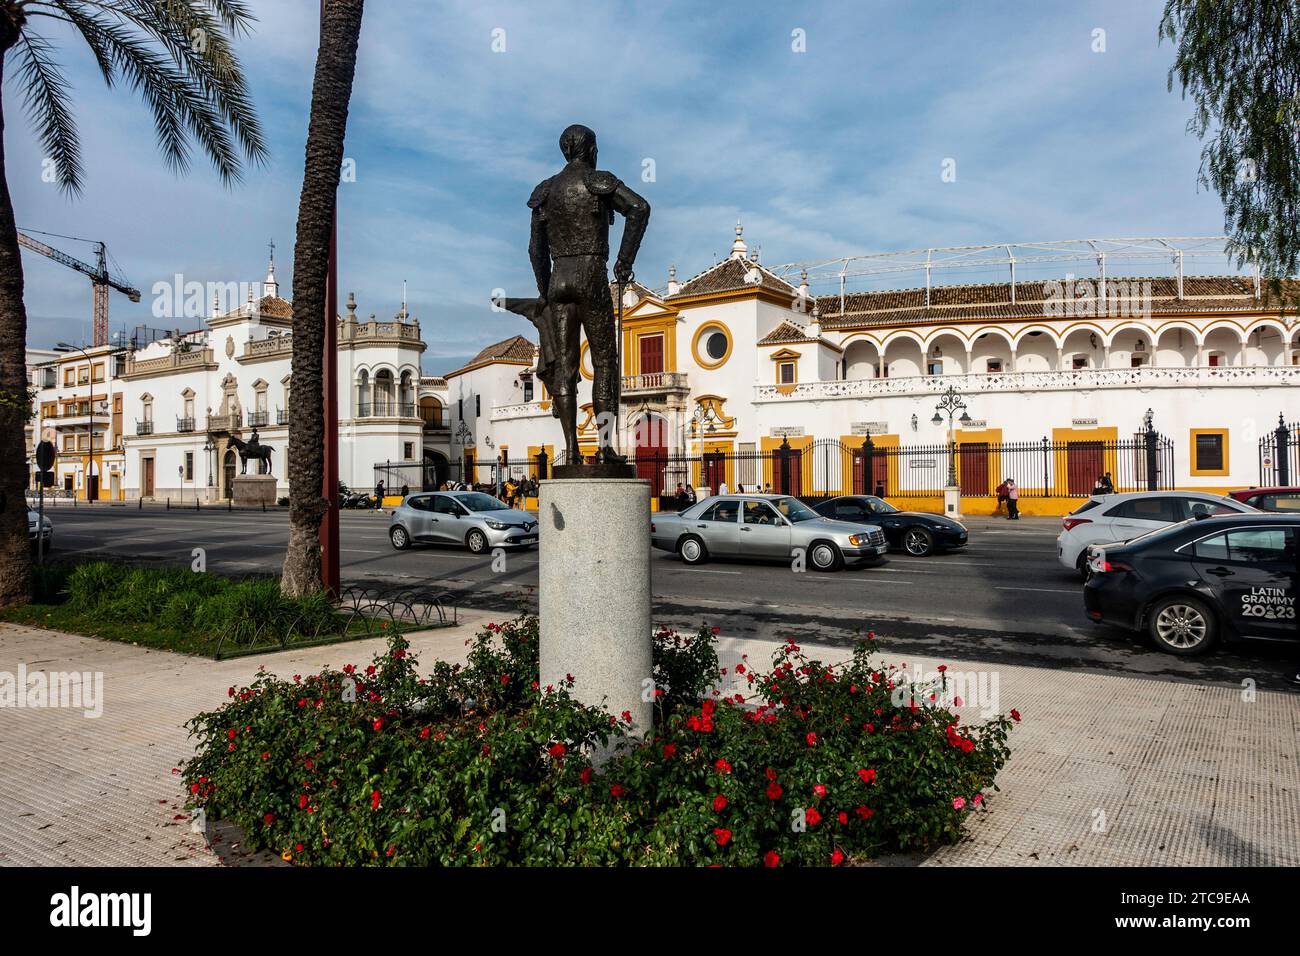 The statue of the famous Spanish bullfighter, , opposite the bullring in Seville, Spain. Stock Photo